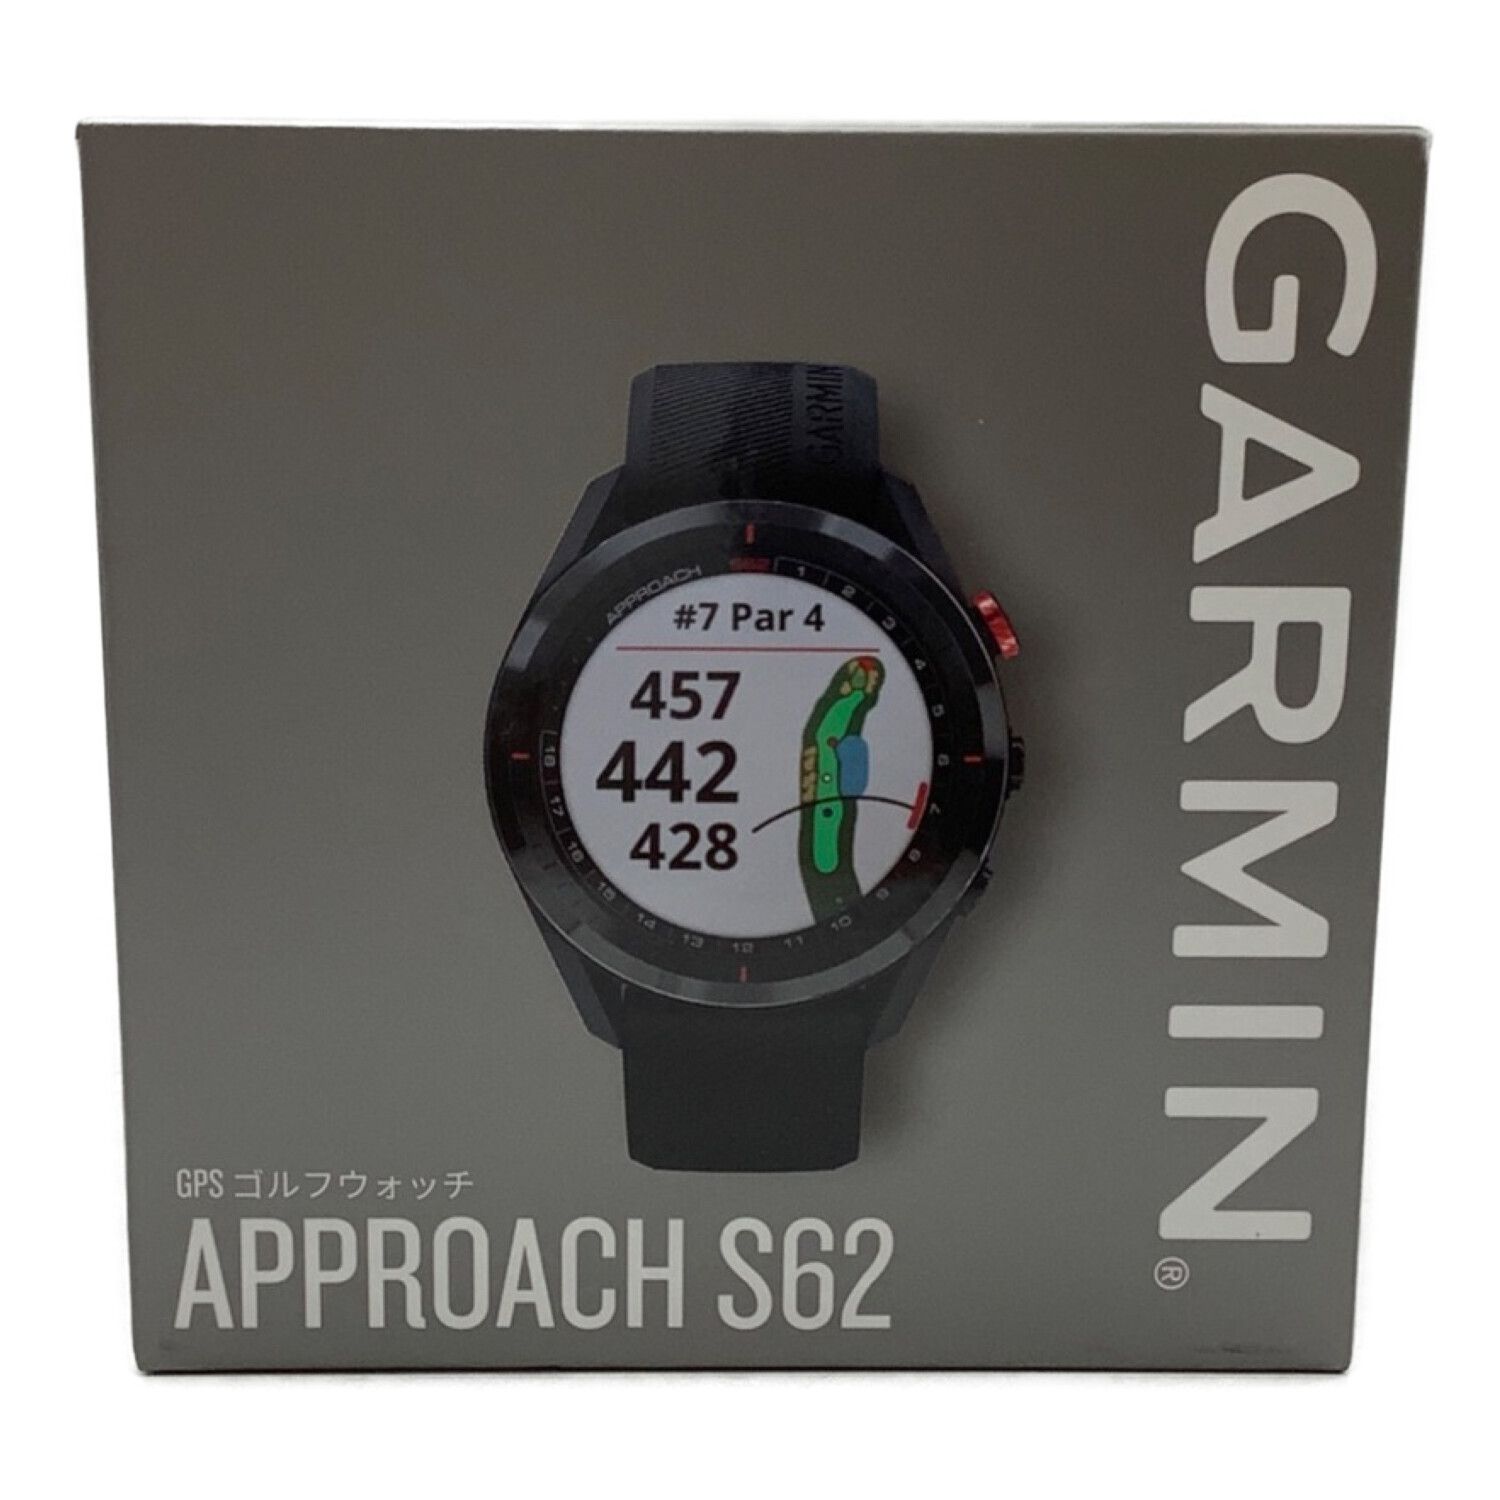 GPSゴルフウォッチAPPROACH S62 GARMIN ガーミン - 時計